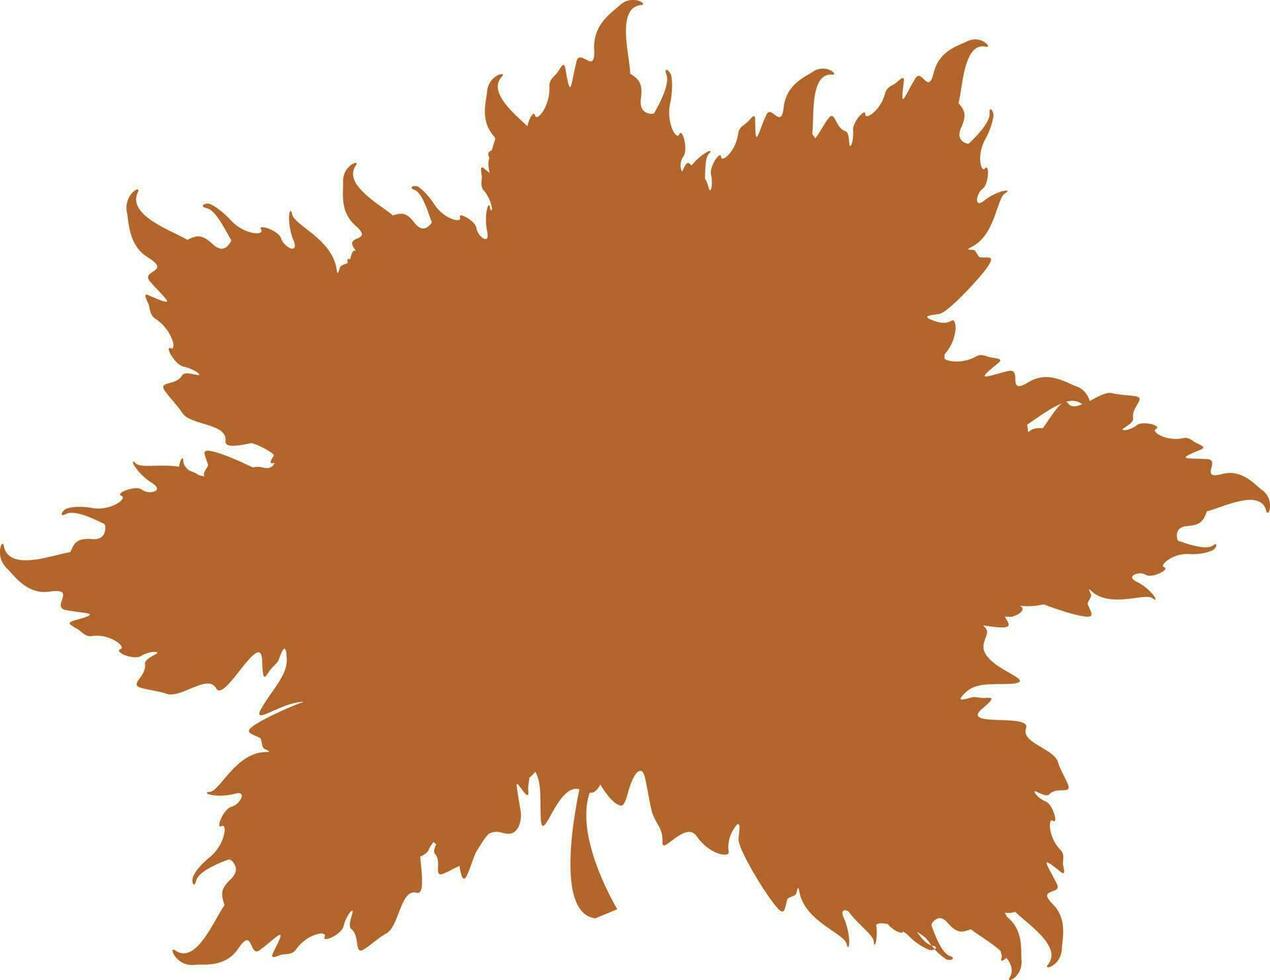 Brown monochrome icon of Autumn leaf. vector